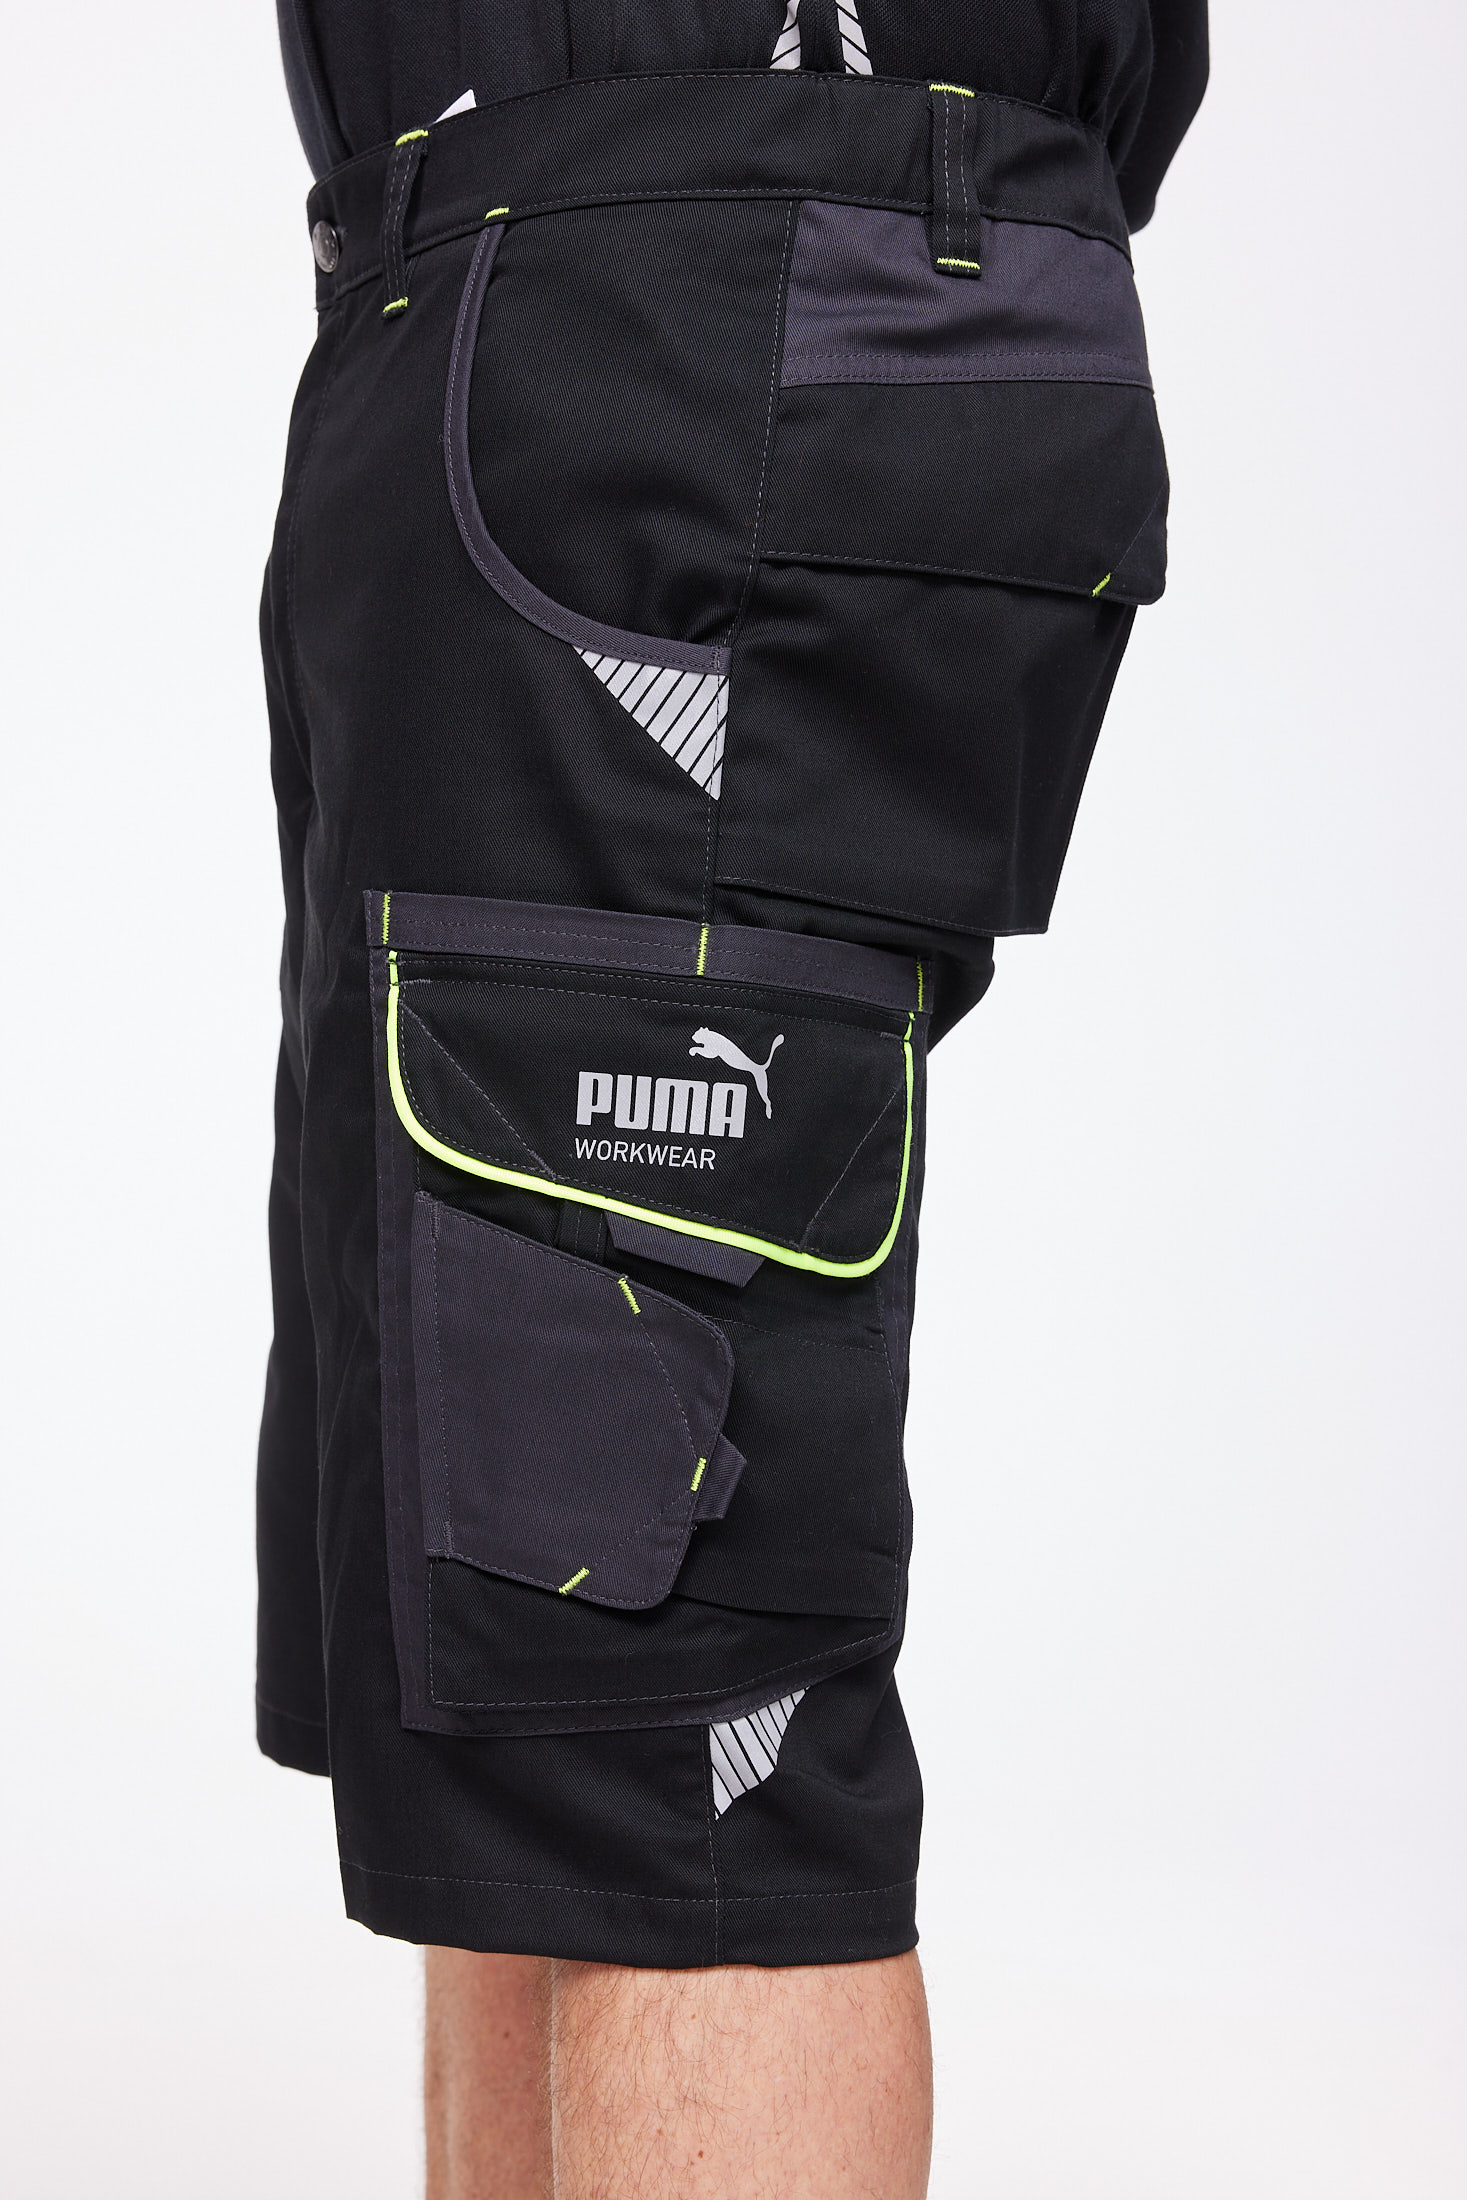 PUMA Workwear Precision X Herren | Puma Shorts Workwear